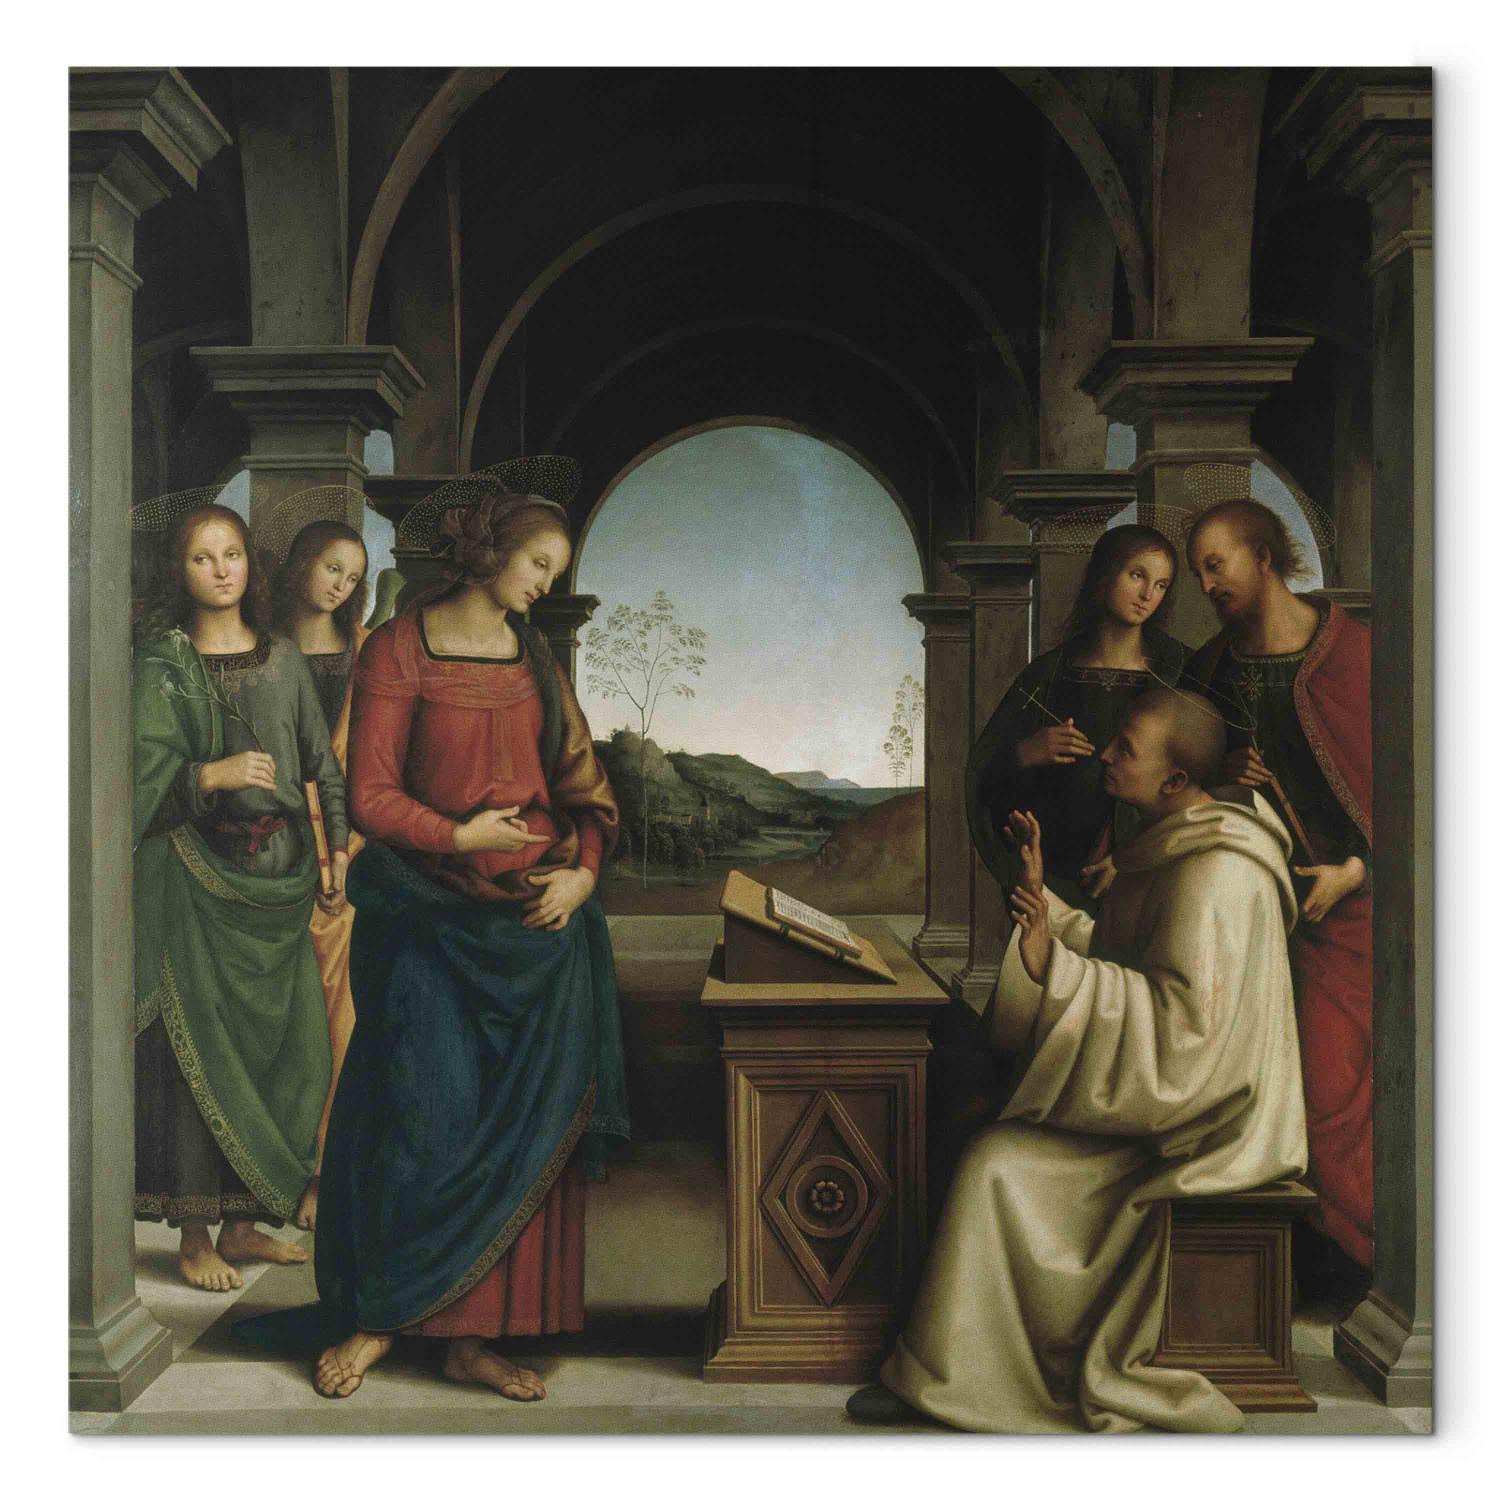 Canvas The Vision of St.Bernard